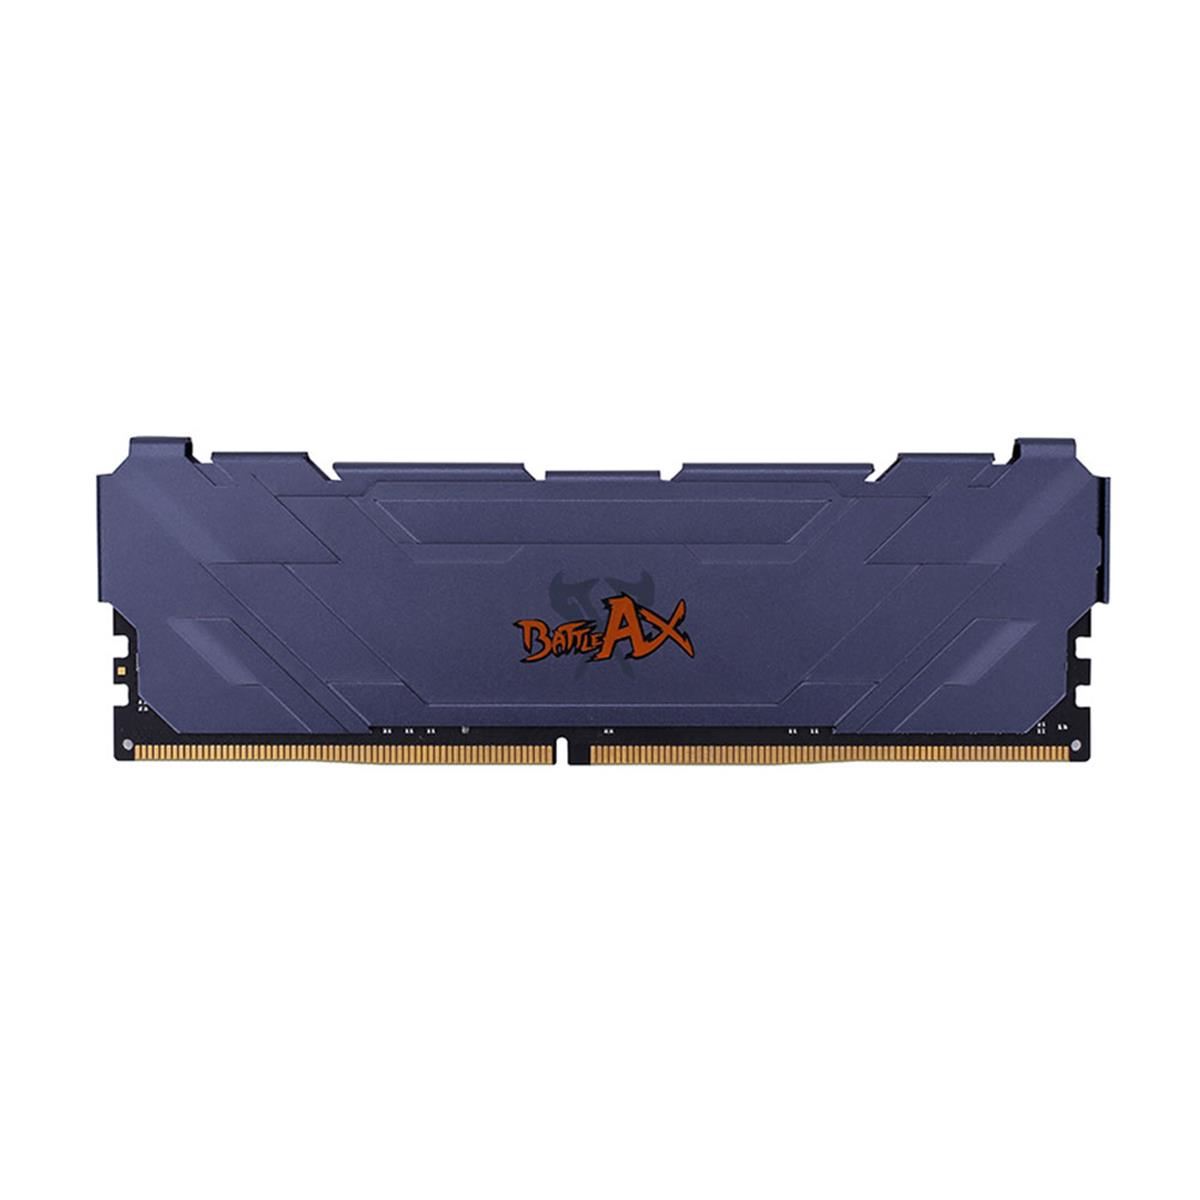 Memoria RAM Battle-AX, 8 GB, 3200 MHz, DDR4, CL16 COLORFUL